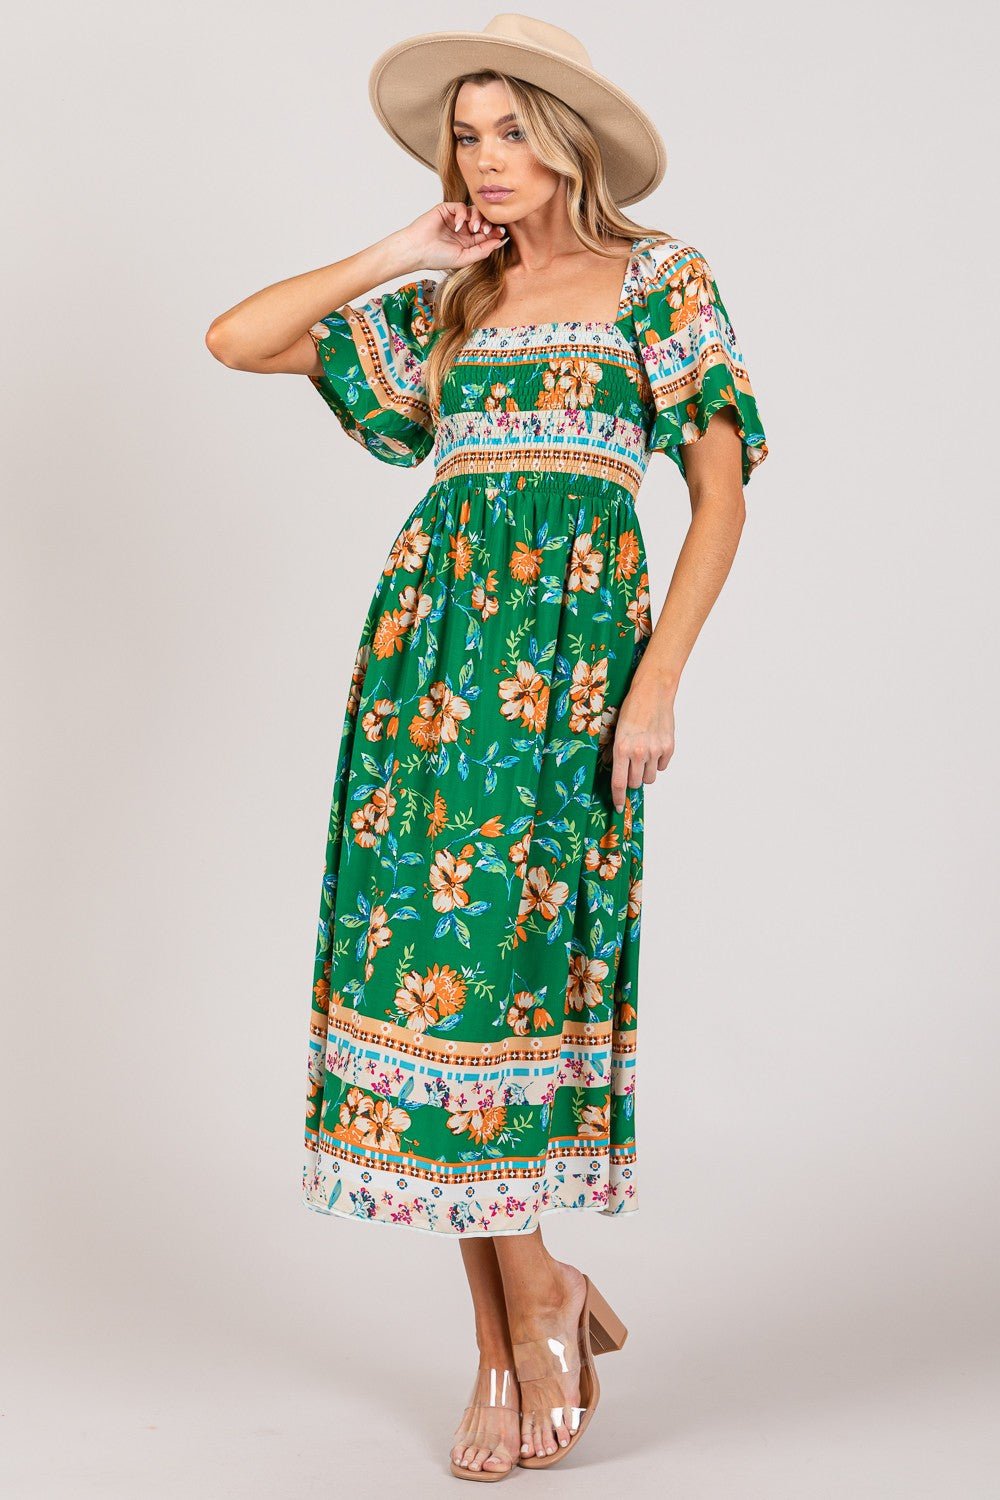 Floral Print Smocked Short Sleeve Midi Dress in GreenMidi DressSAGE+FIG